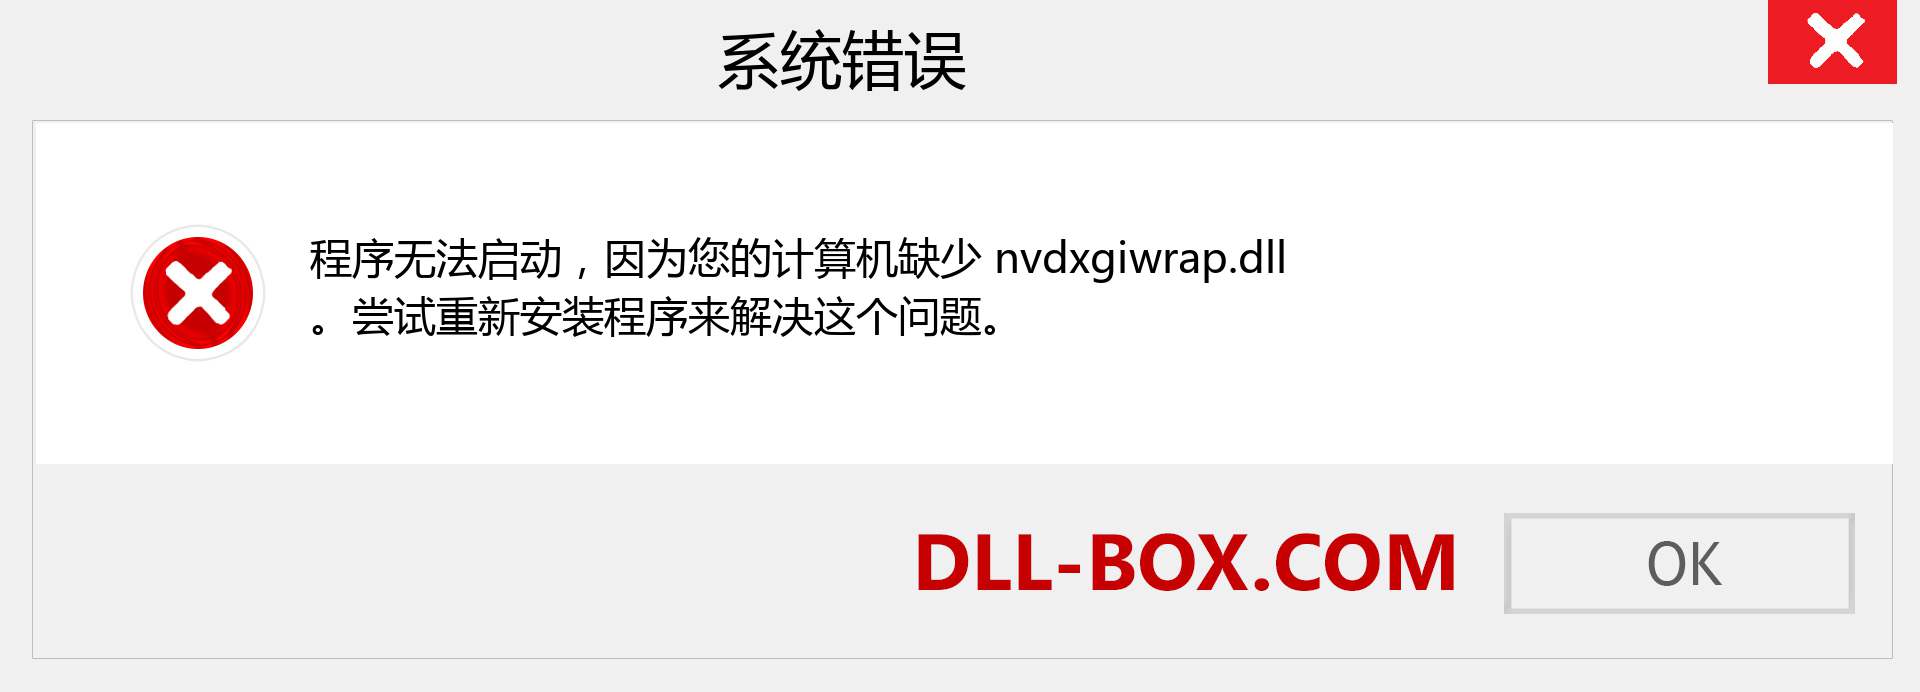 nvdxgiwrap.dll 文件丢失？。 适用于 Windows 7、8、10 的下载 - 修复 Windows、照片、图像上的 nvdxgiwrap dll 丢失错误